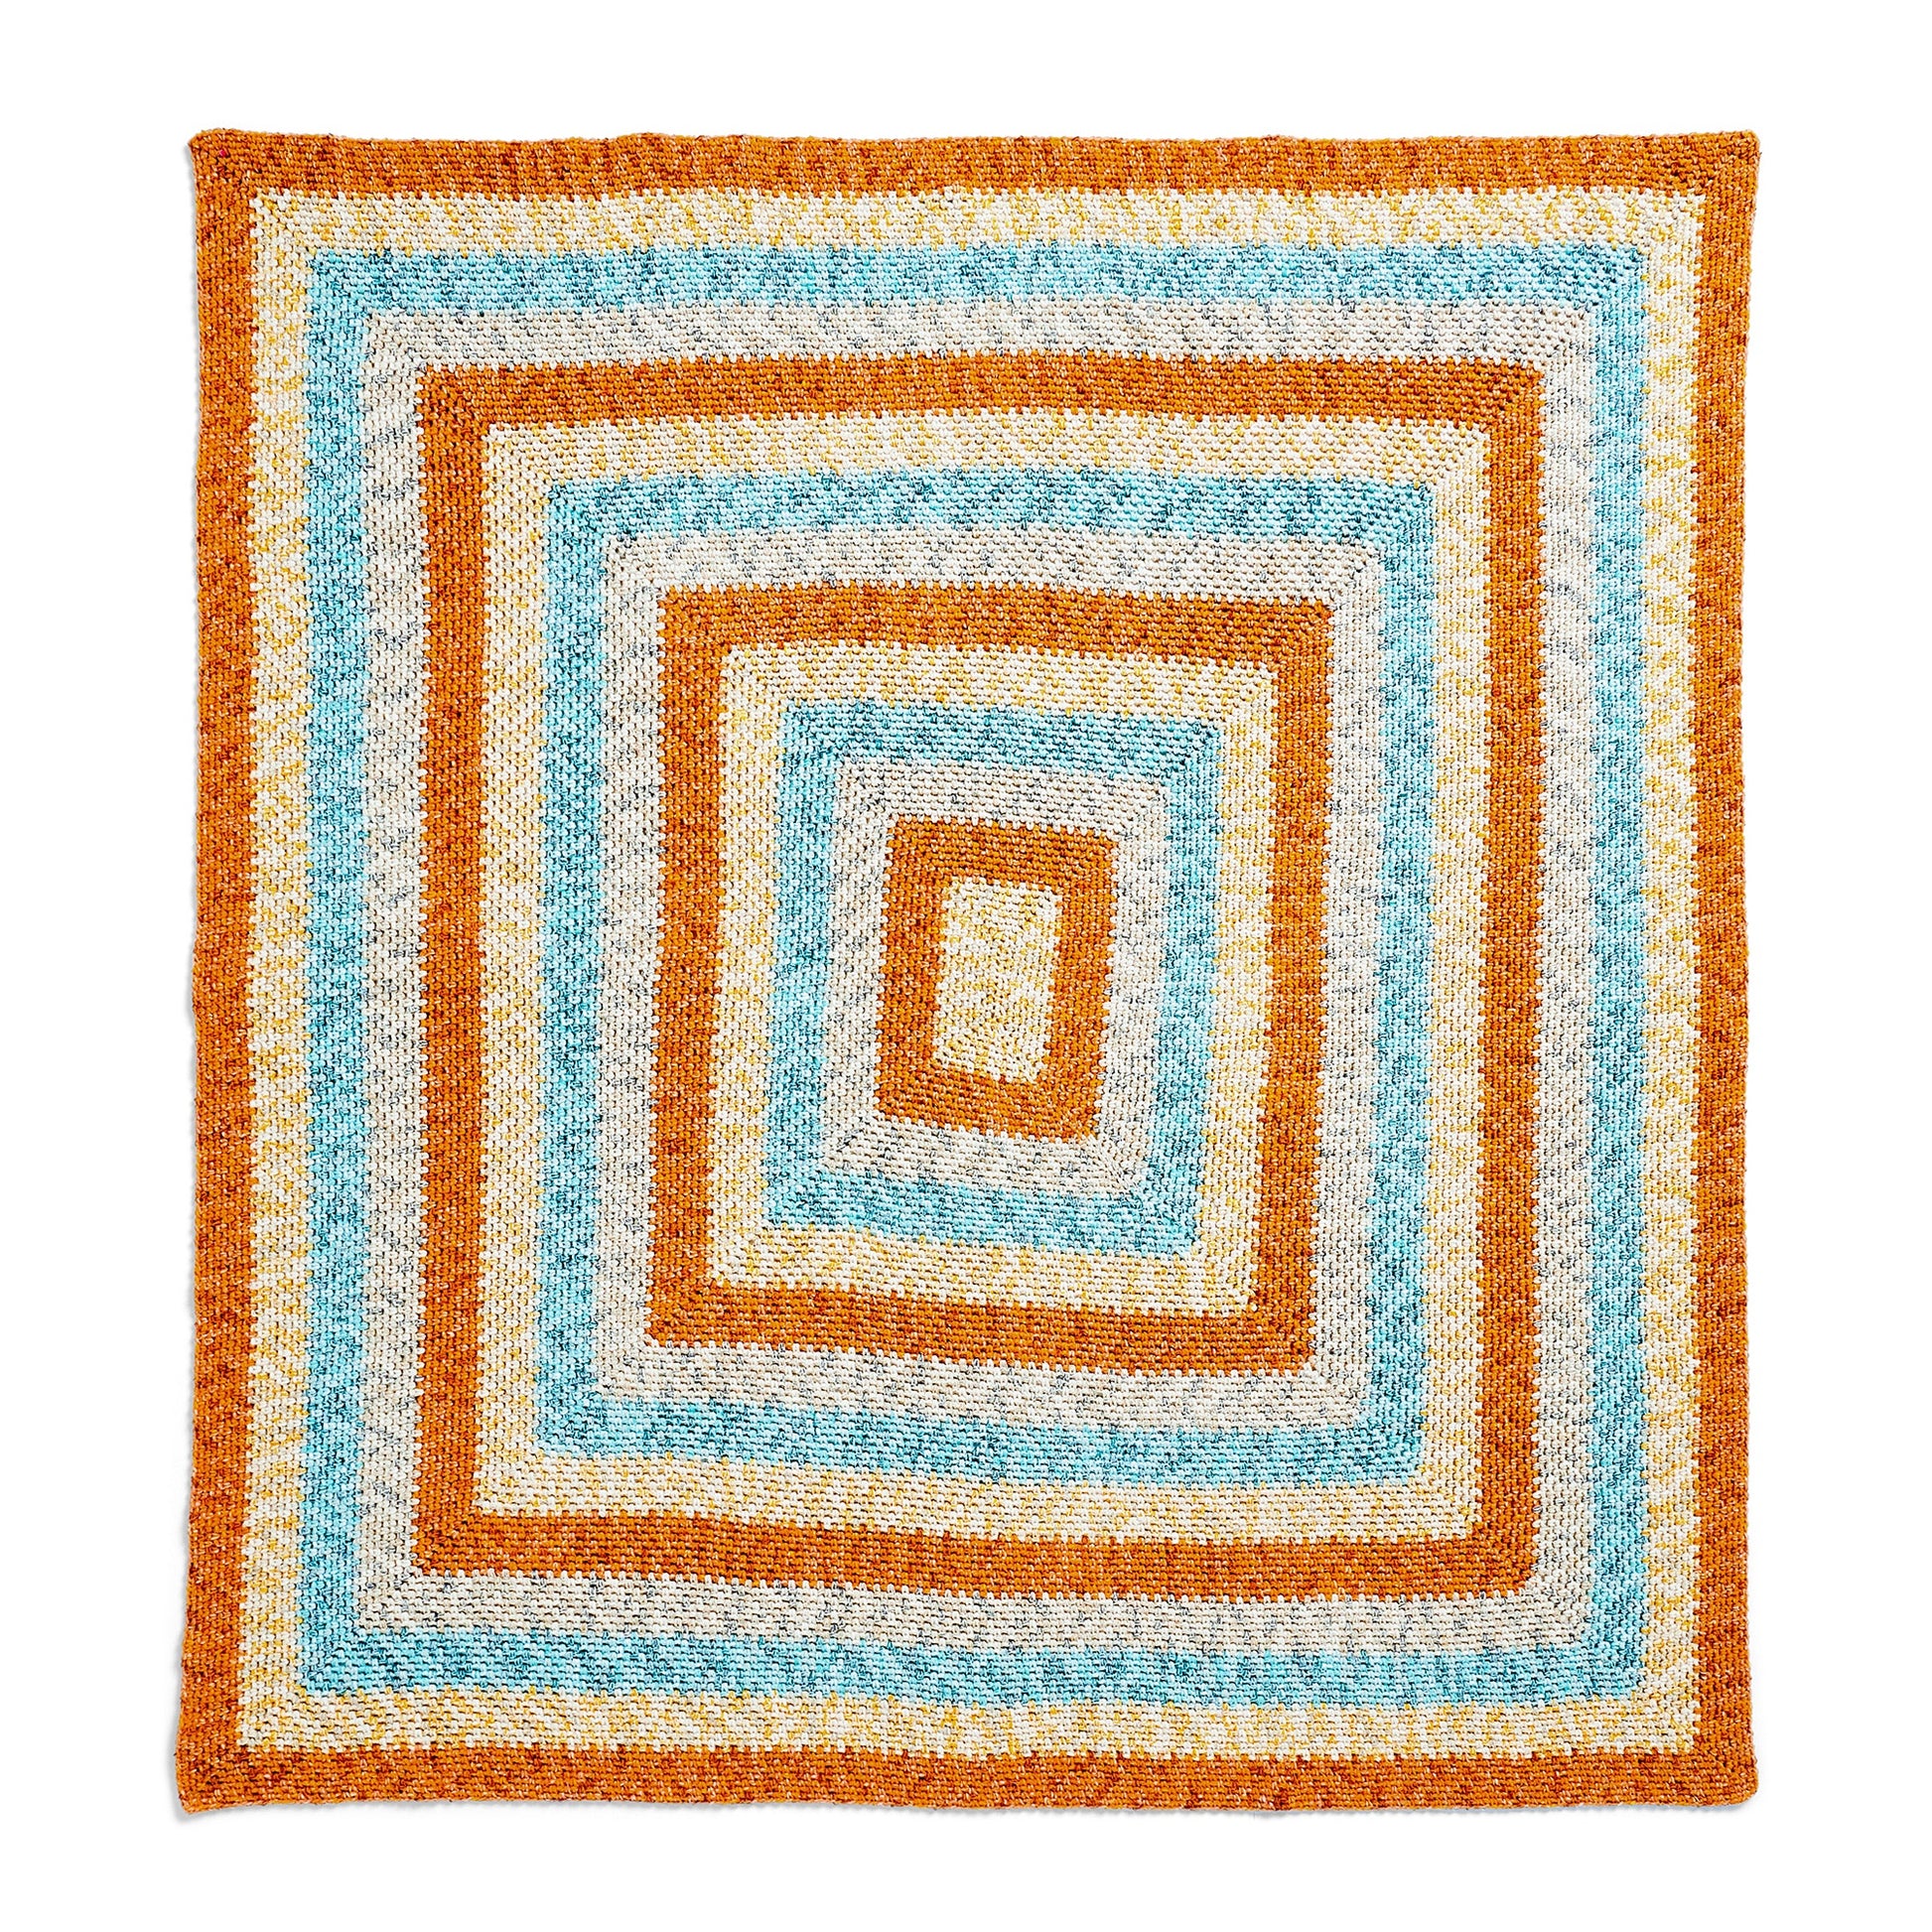 Free Bernat Lattice Crochet Color-Blocked Crochet Blanket Pattern